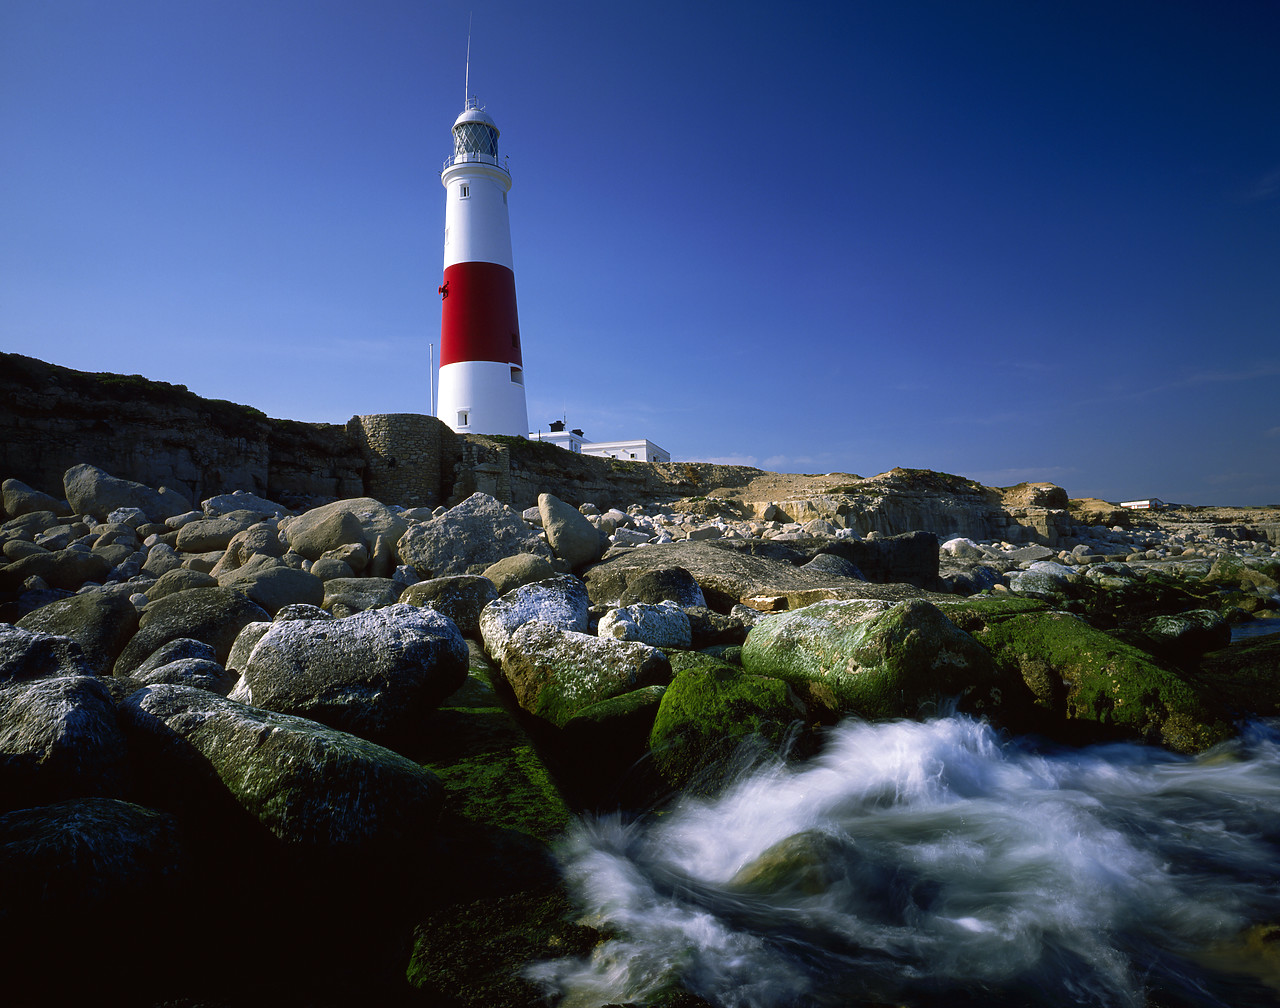 #913398-3 - Portland Bill Lighthouse, Dorset, England